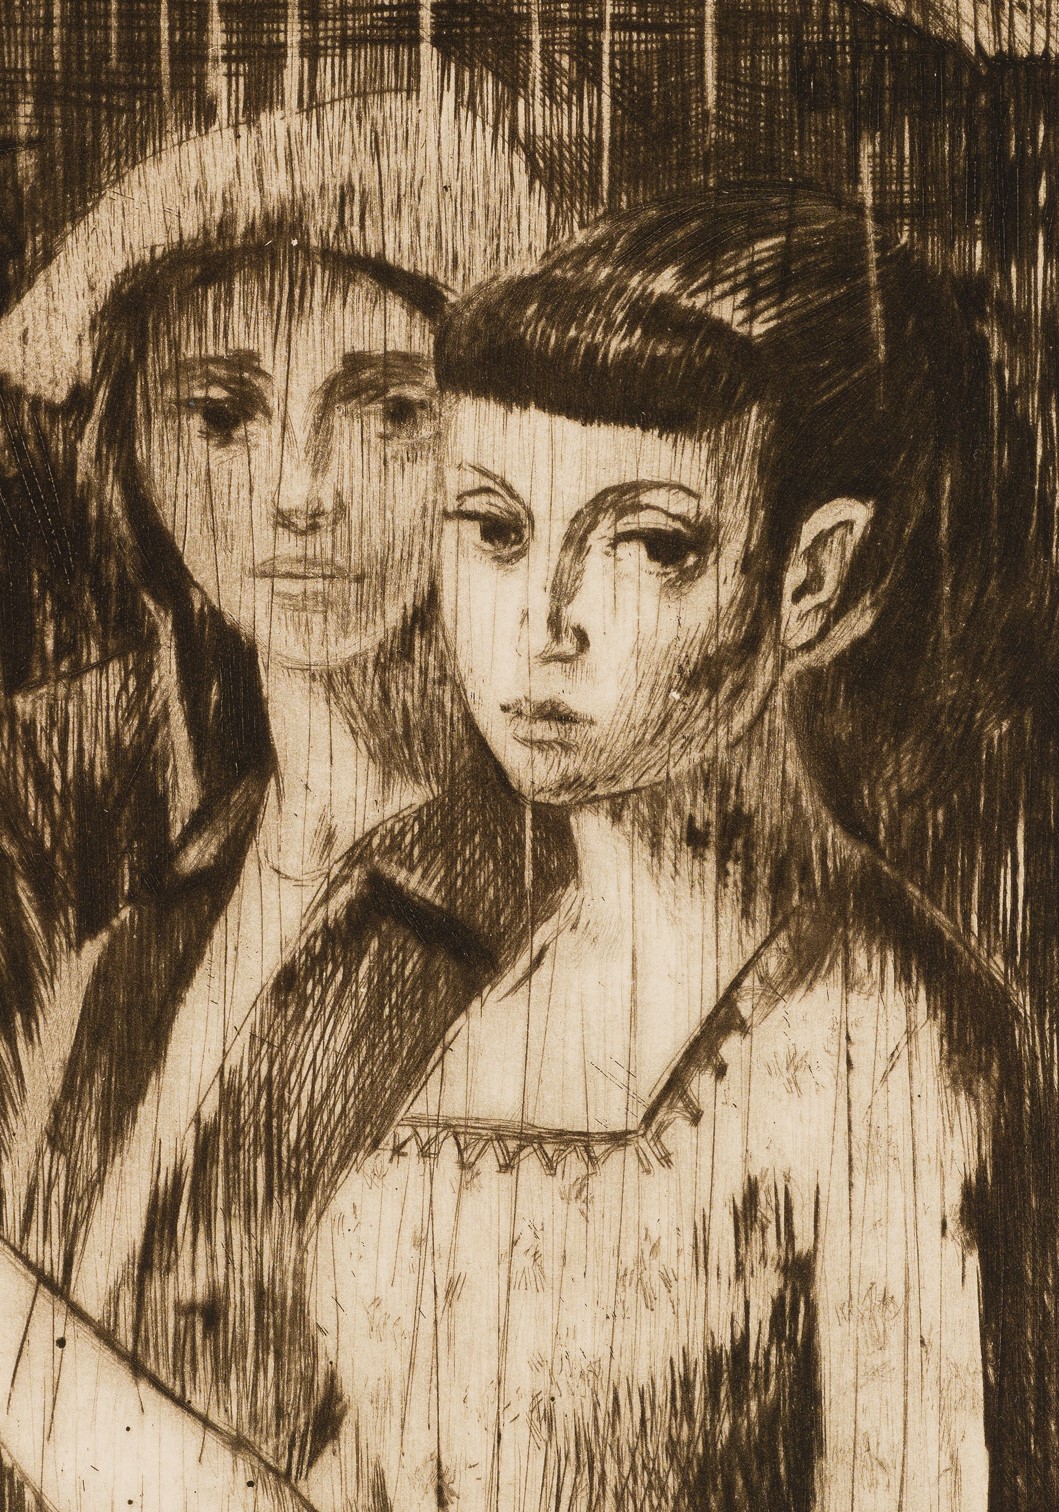 Avo Keerend “Sajus”, 1959. 31 x 41,5 cm.